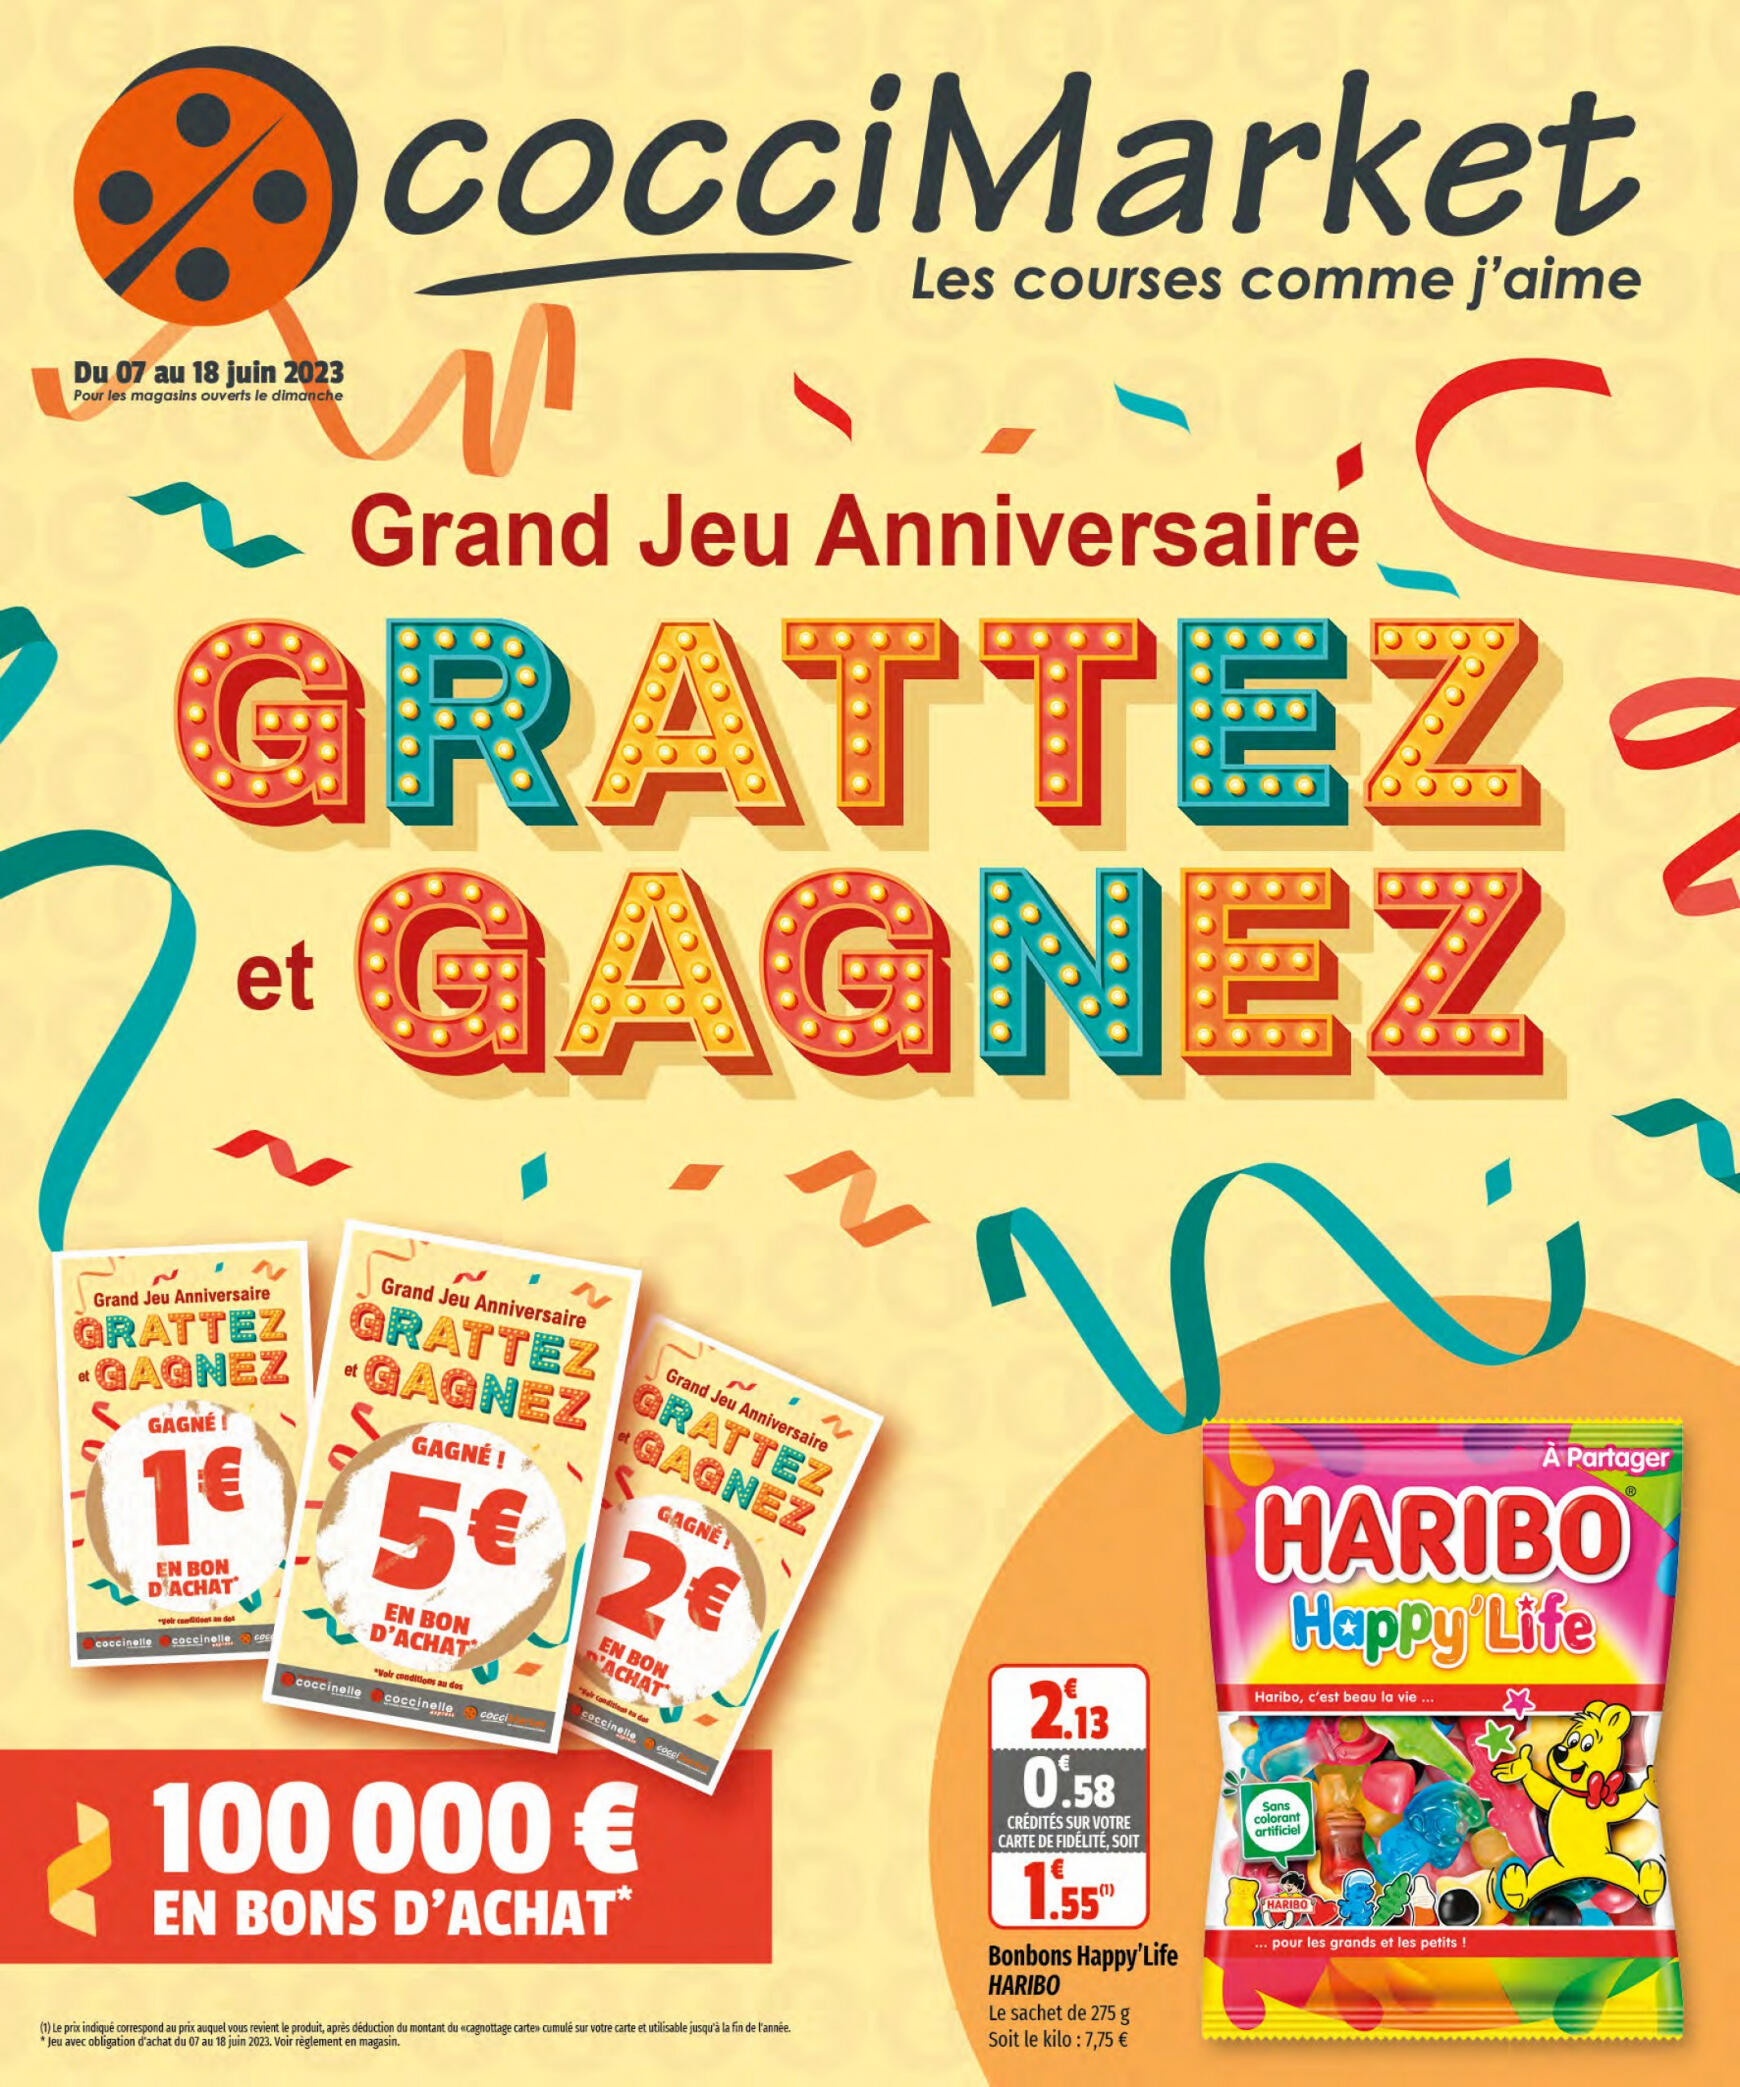 cocci-market - CocciMarket - page: 1